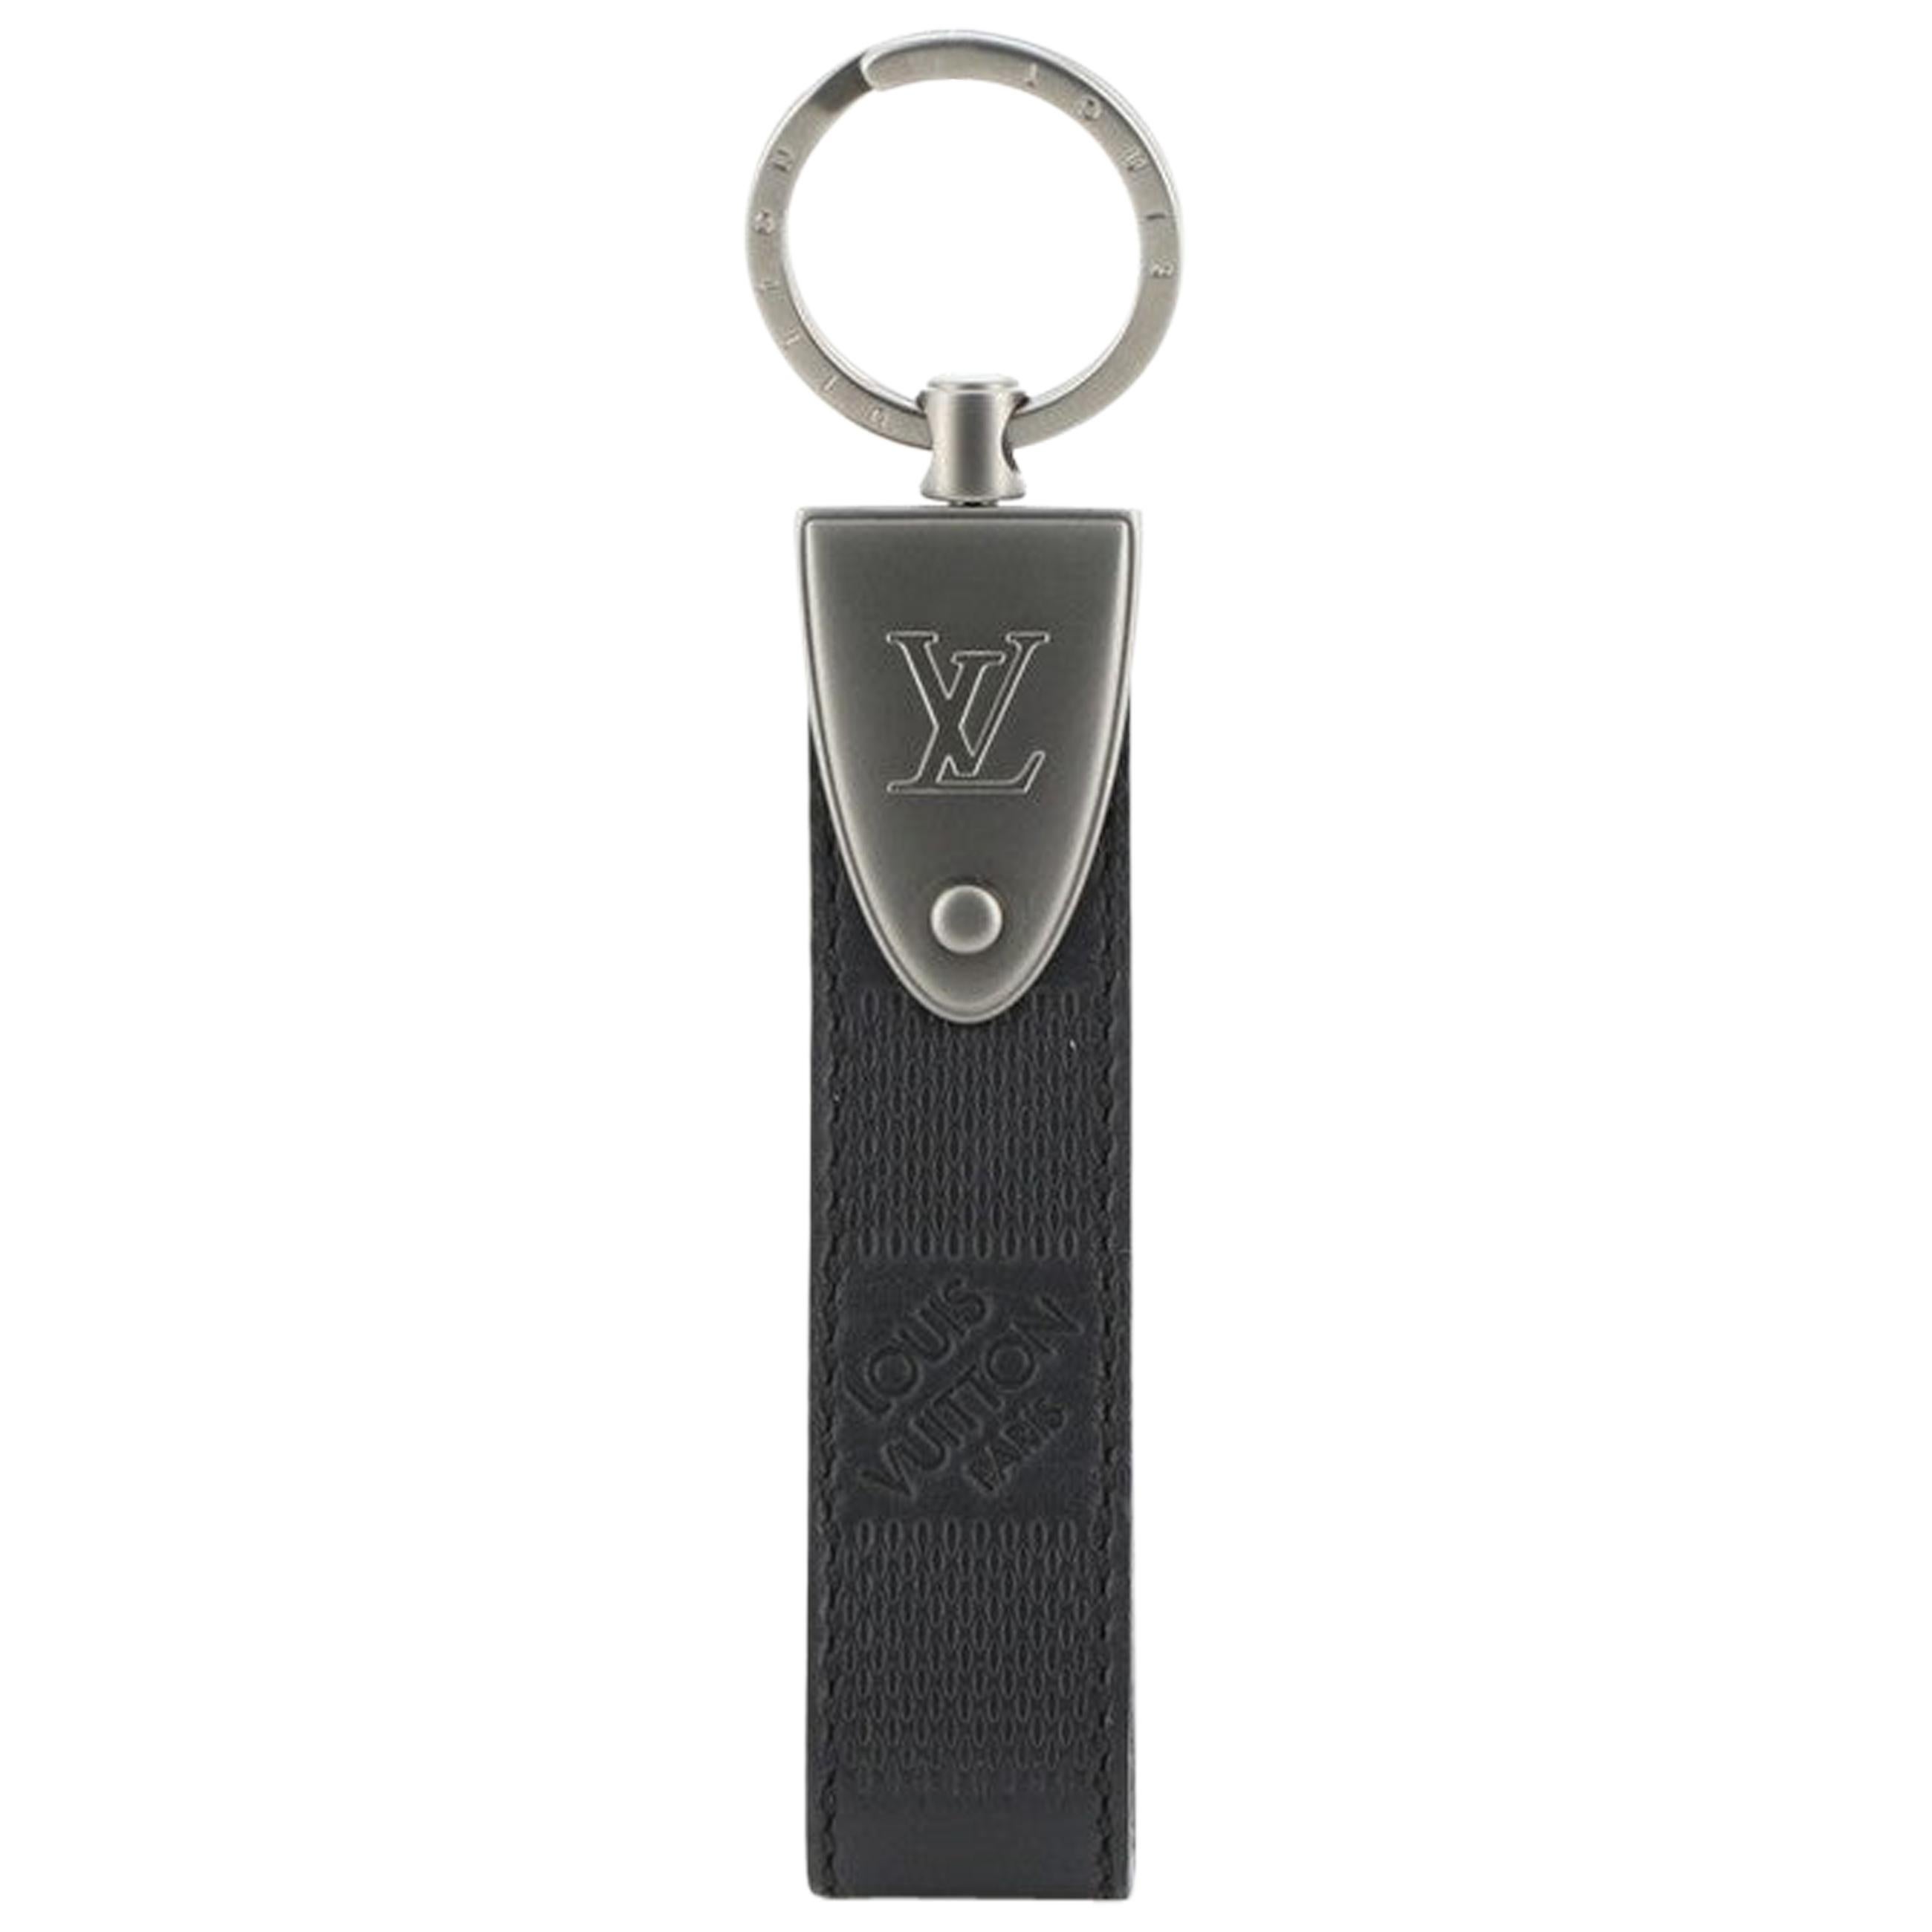 Louis Vuitton 'New Wave' Dragonne Key Holder Keyring - SOLD